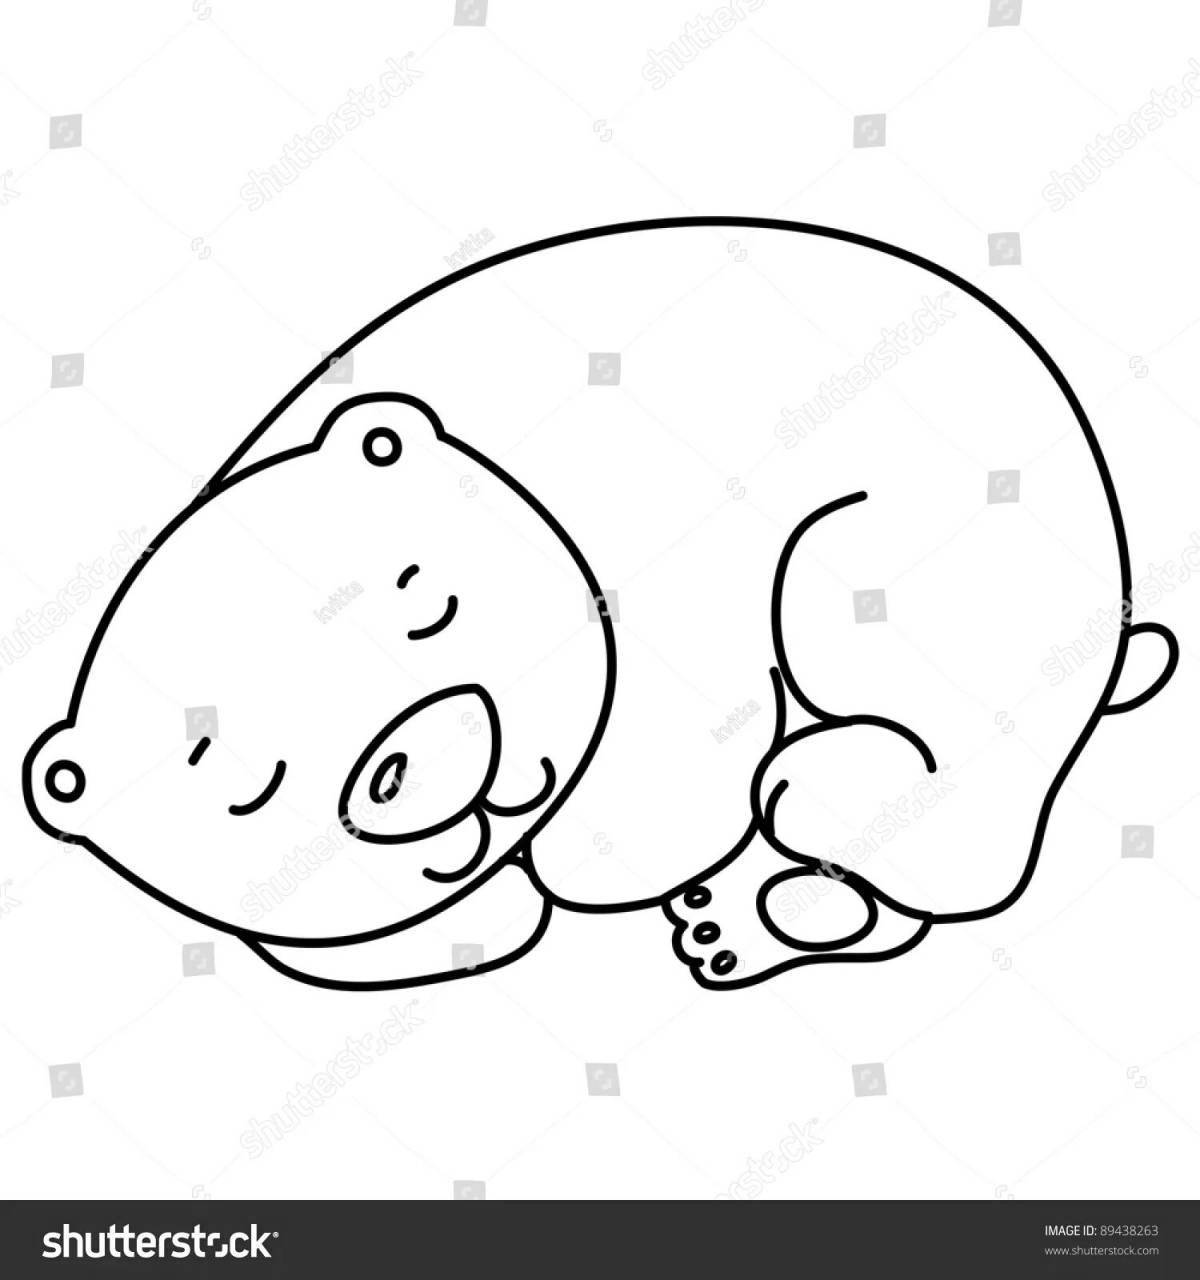 Snuggled coloring page спящий медведь в берлоге